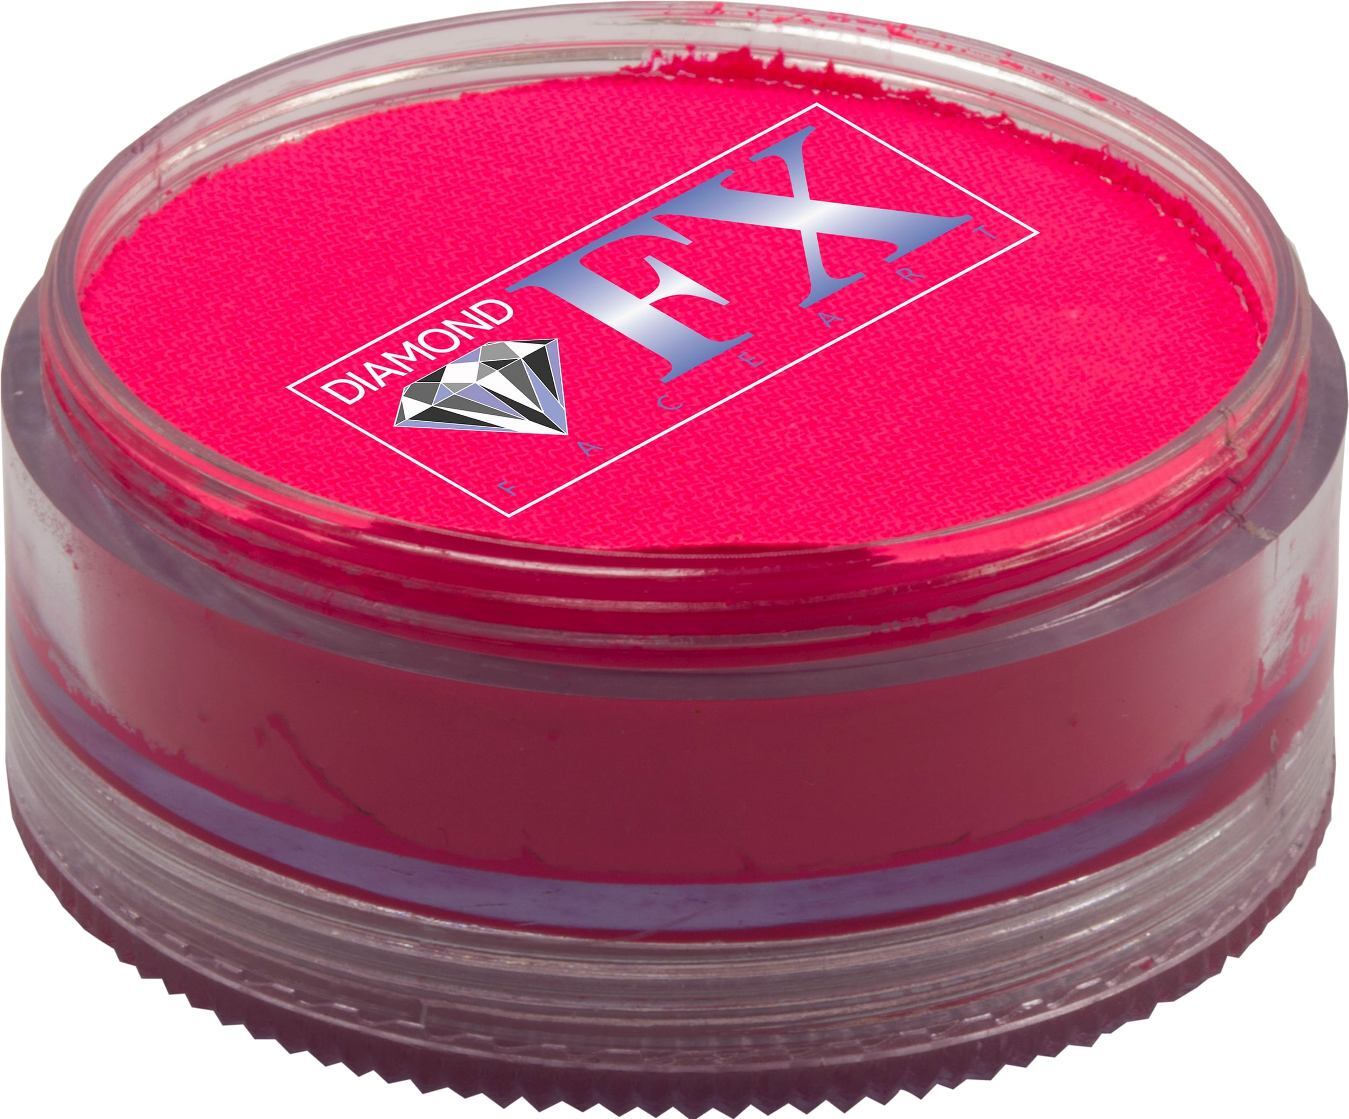 Diamond FX Pink Neon 90g - Small Image